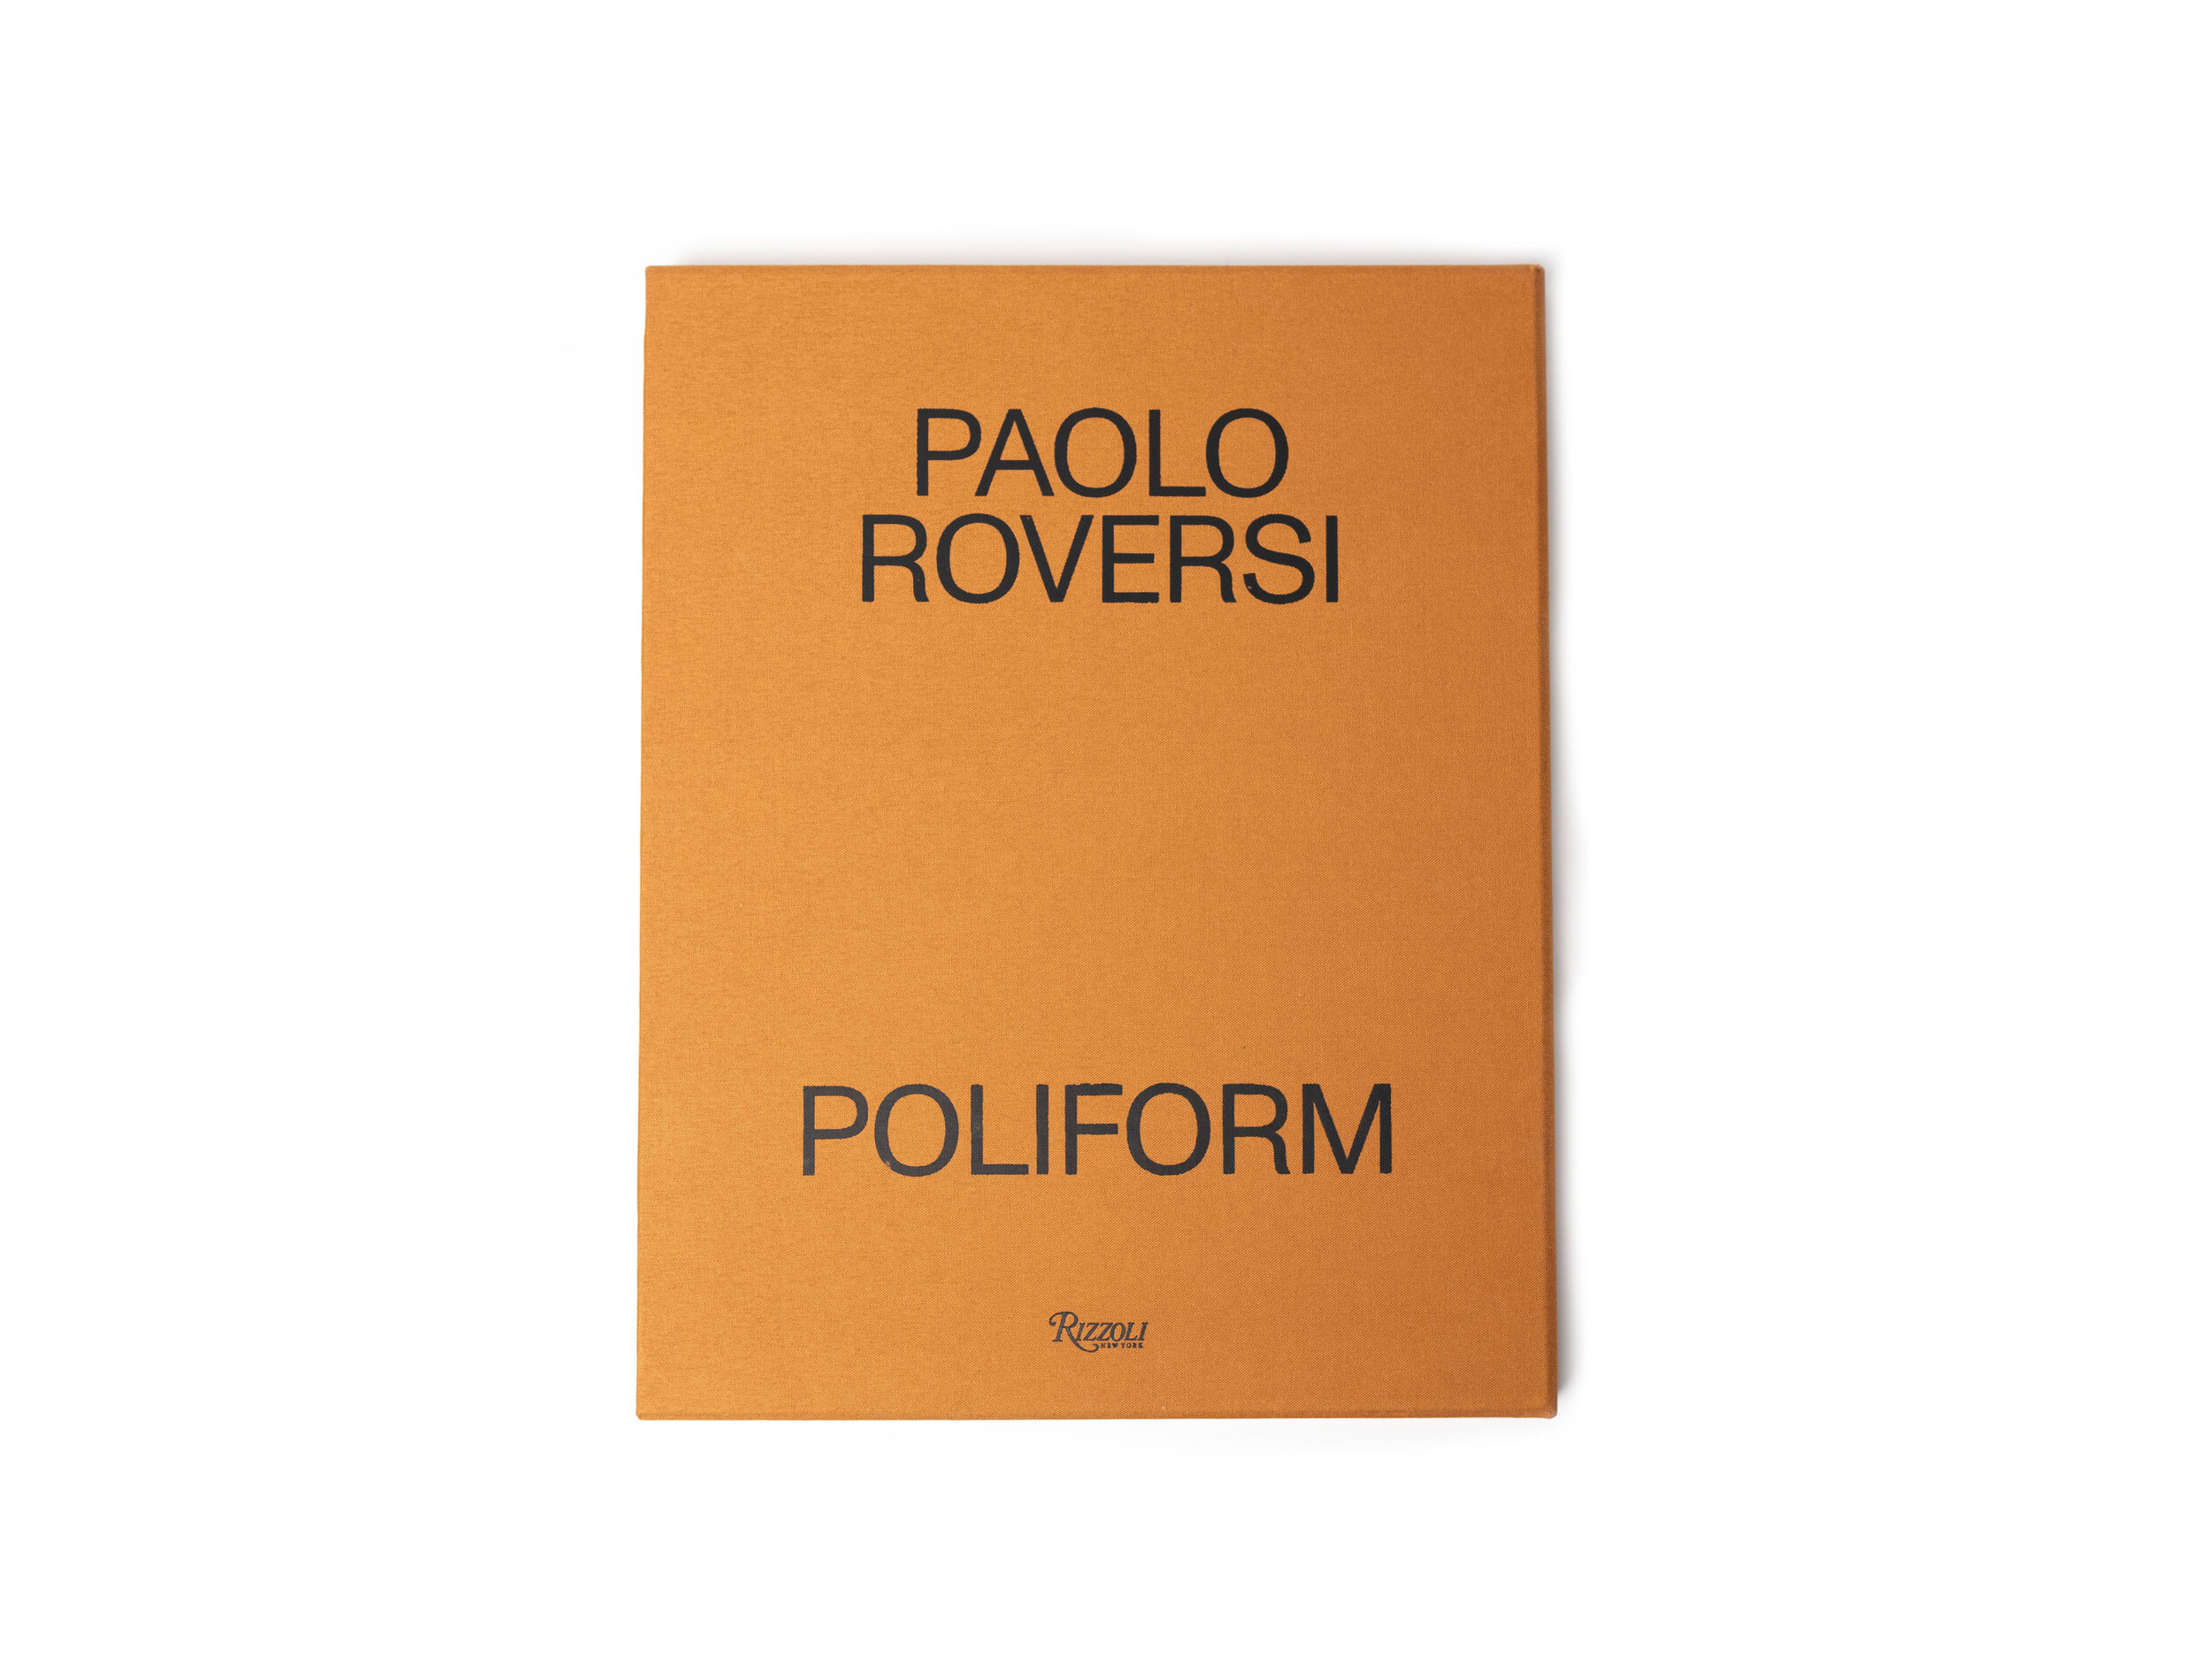 Paolo Roversi - Poliform